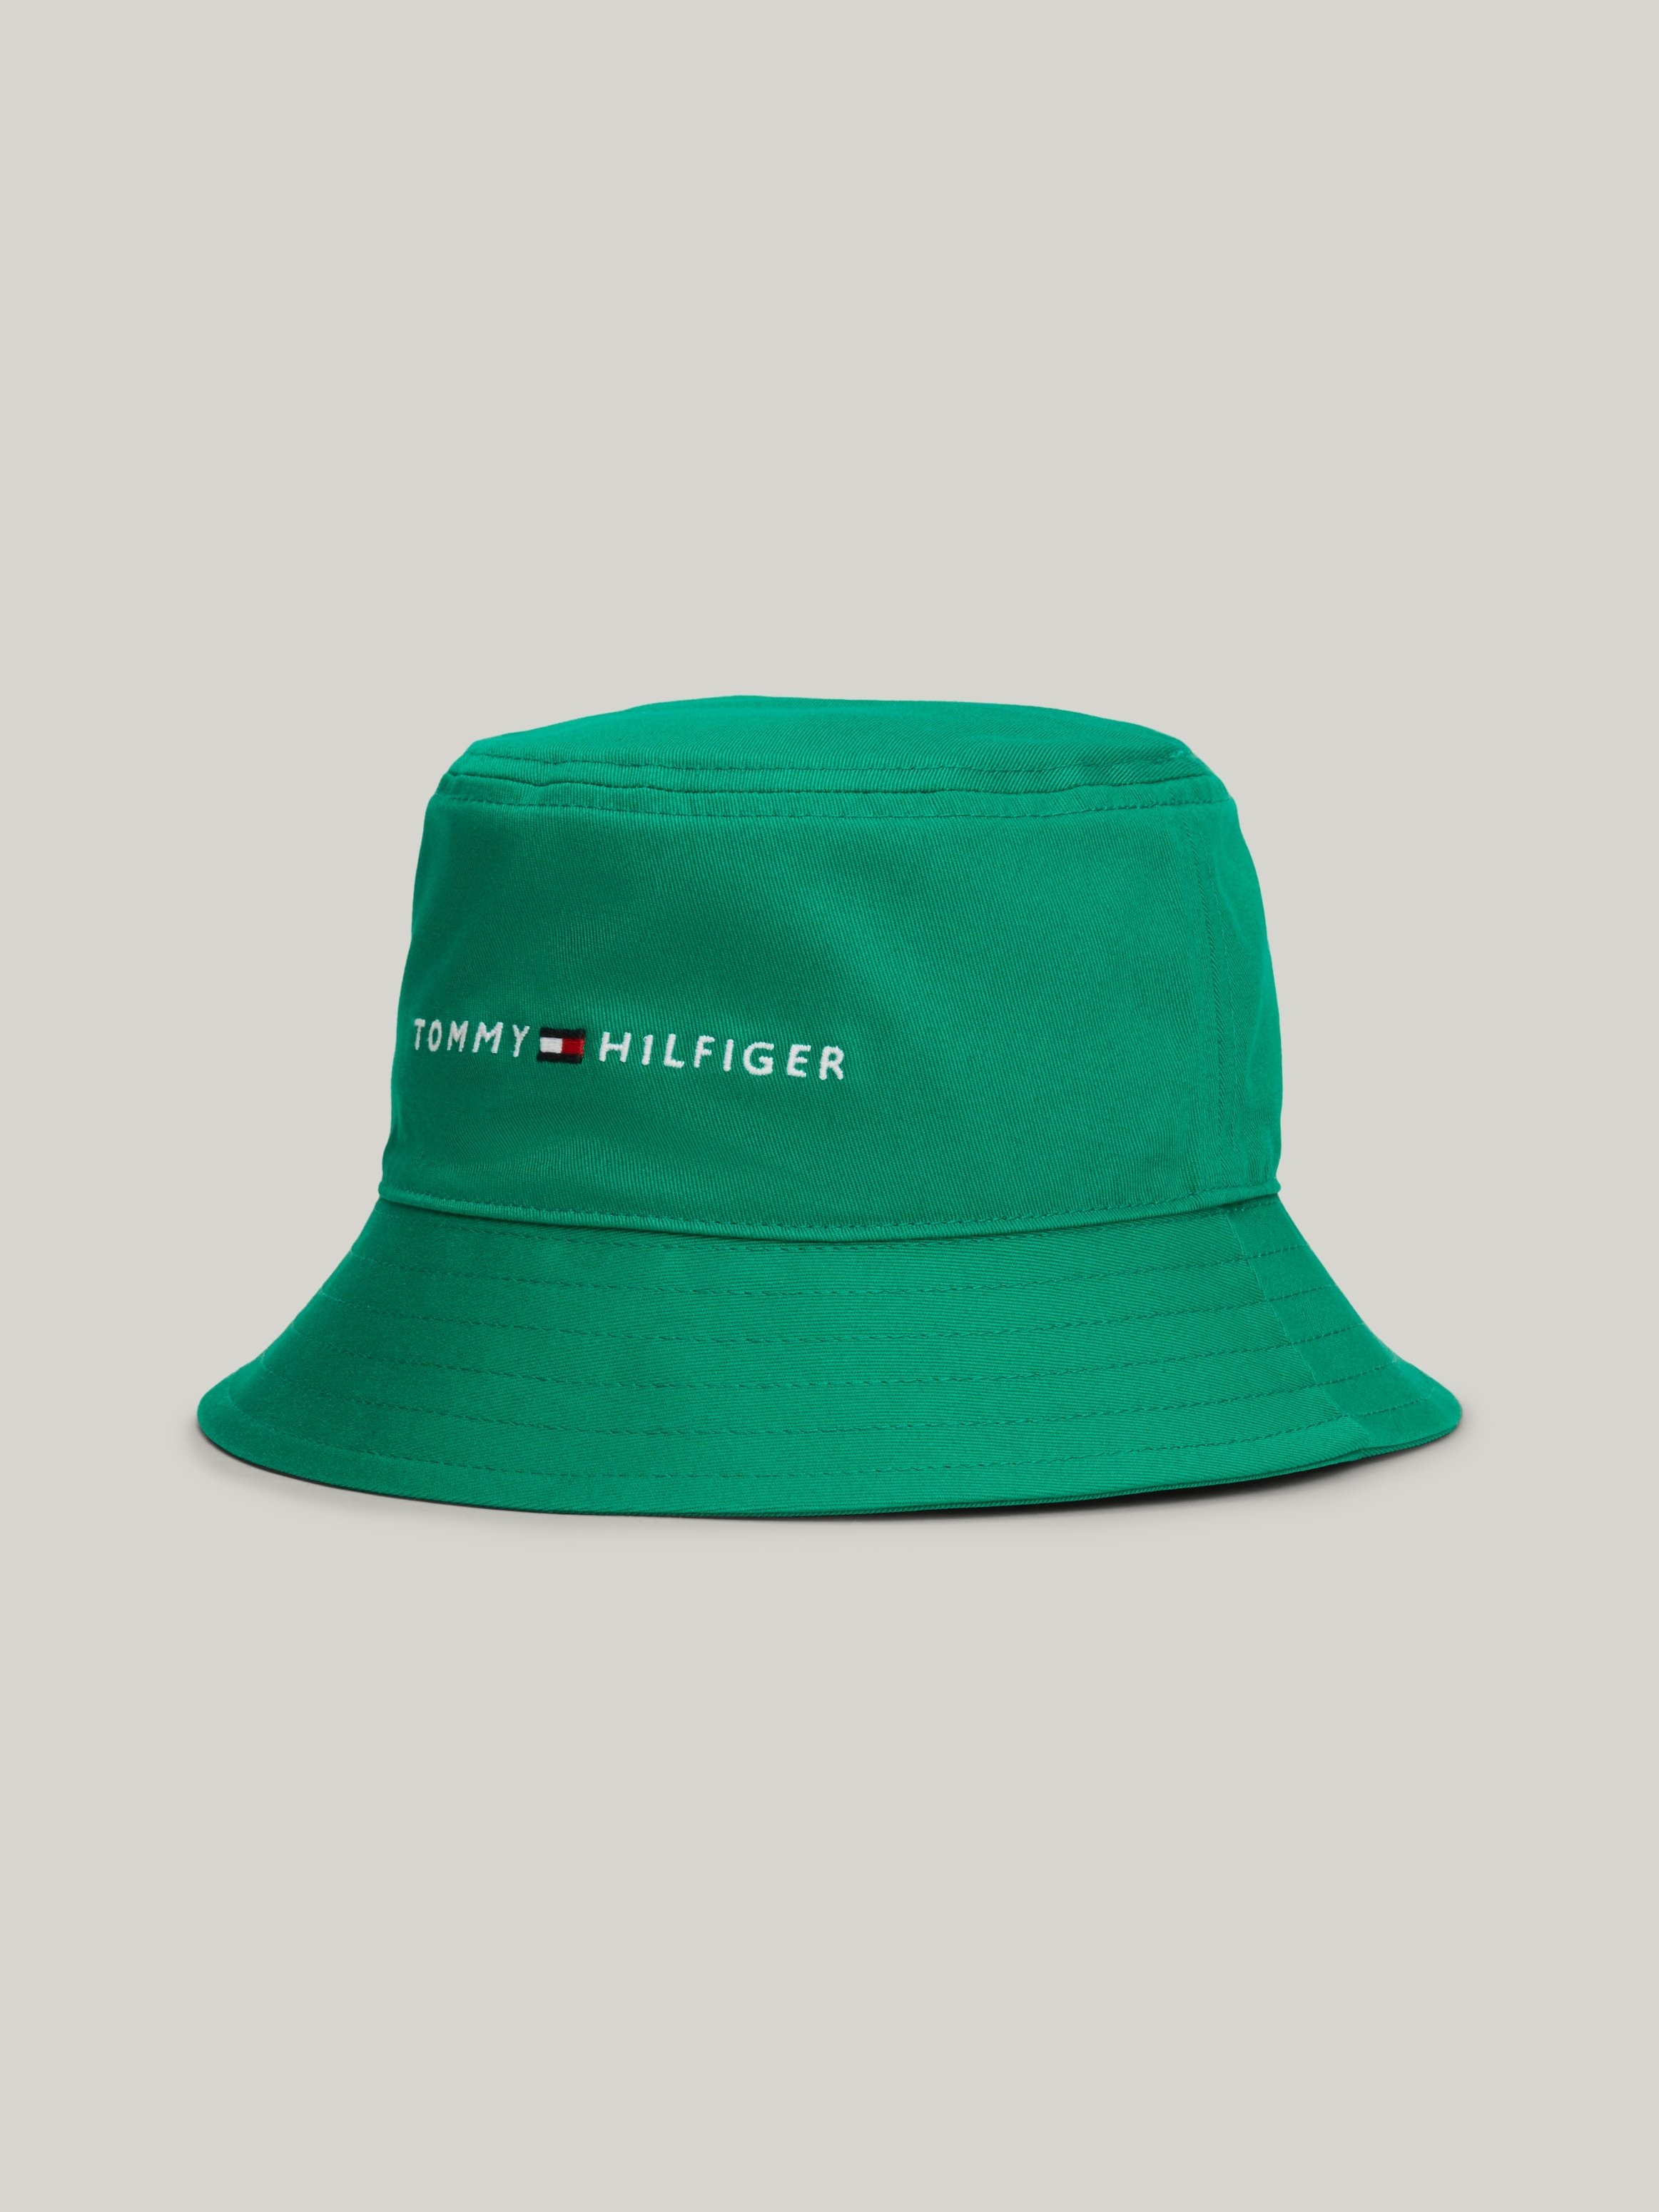 Tommy Hilfiger Fitted Cap »Essential Cap Unisex Bucket Hat«, (1 St.), Kinder Kids Junior MiniMe,im Colorblocking